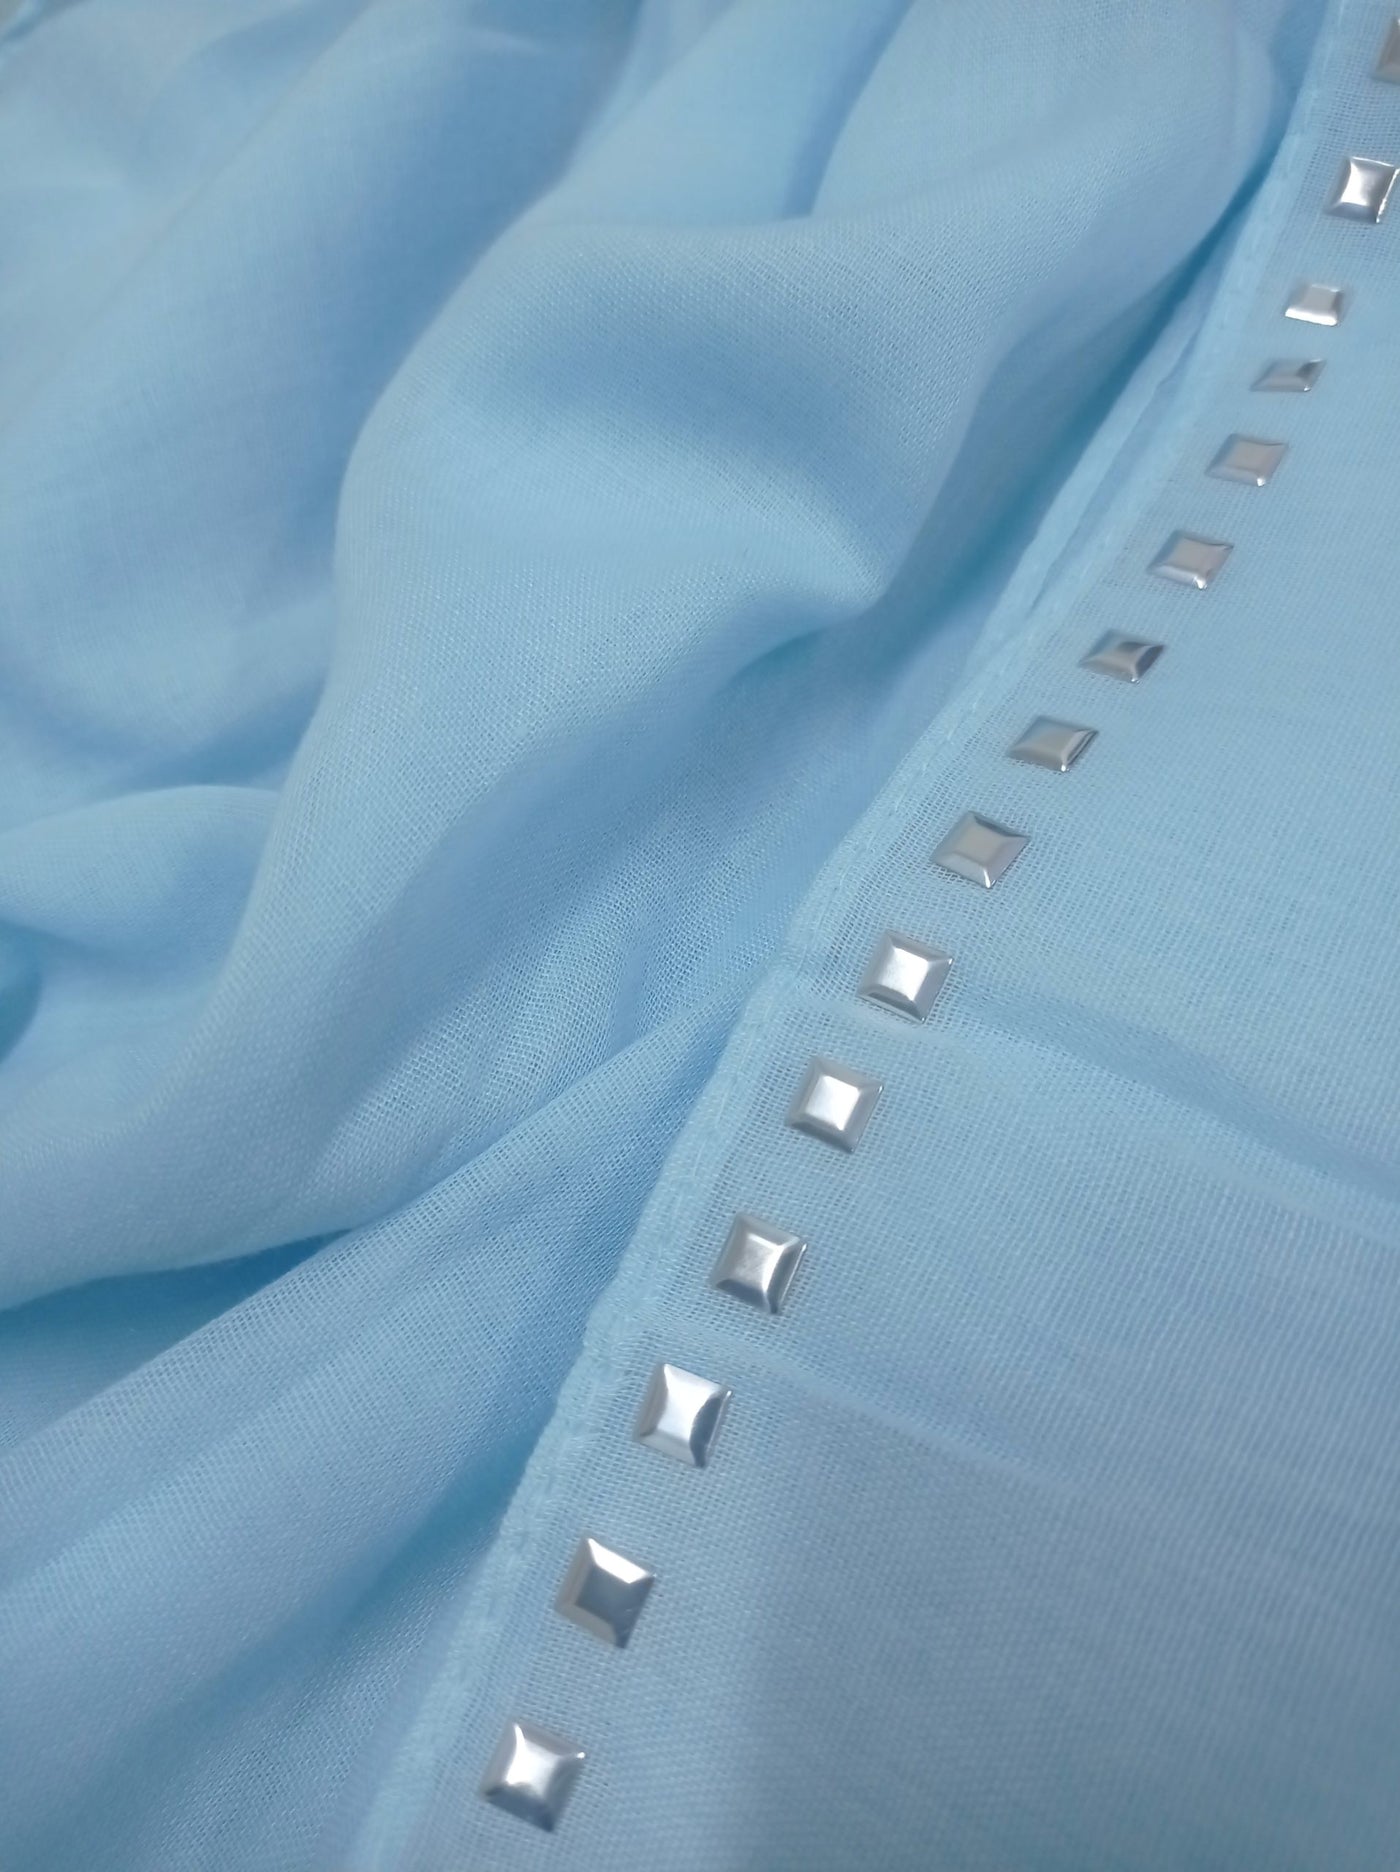 Studded Hijab - Ice Blue - Scarfs.pk #1 Online Hijab Store